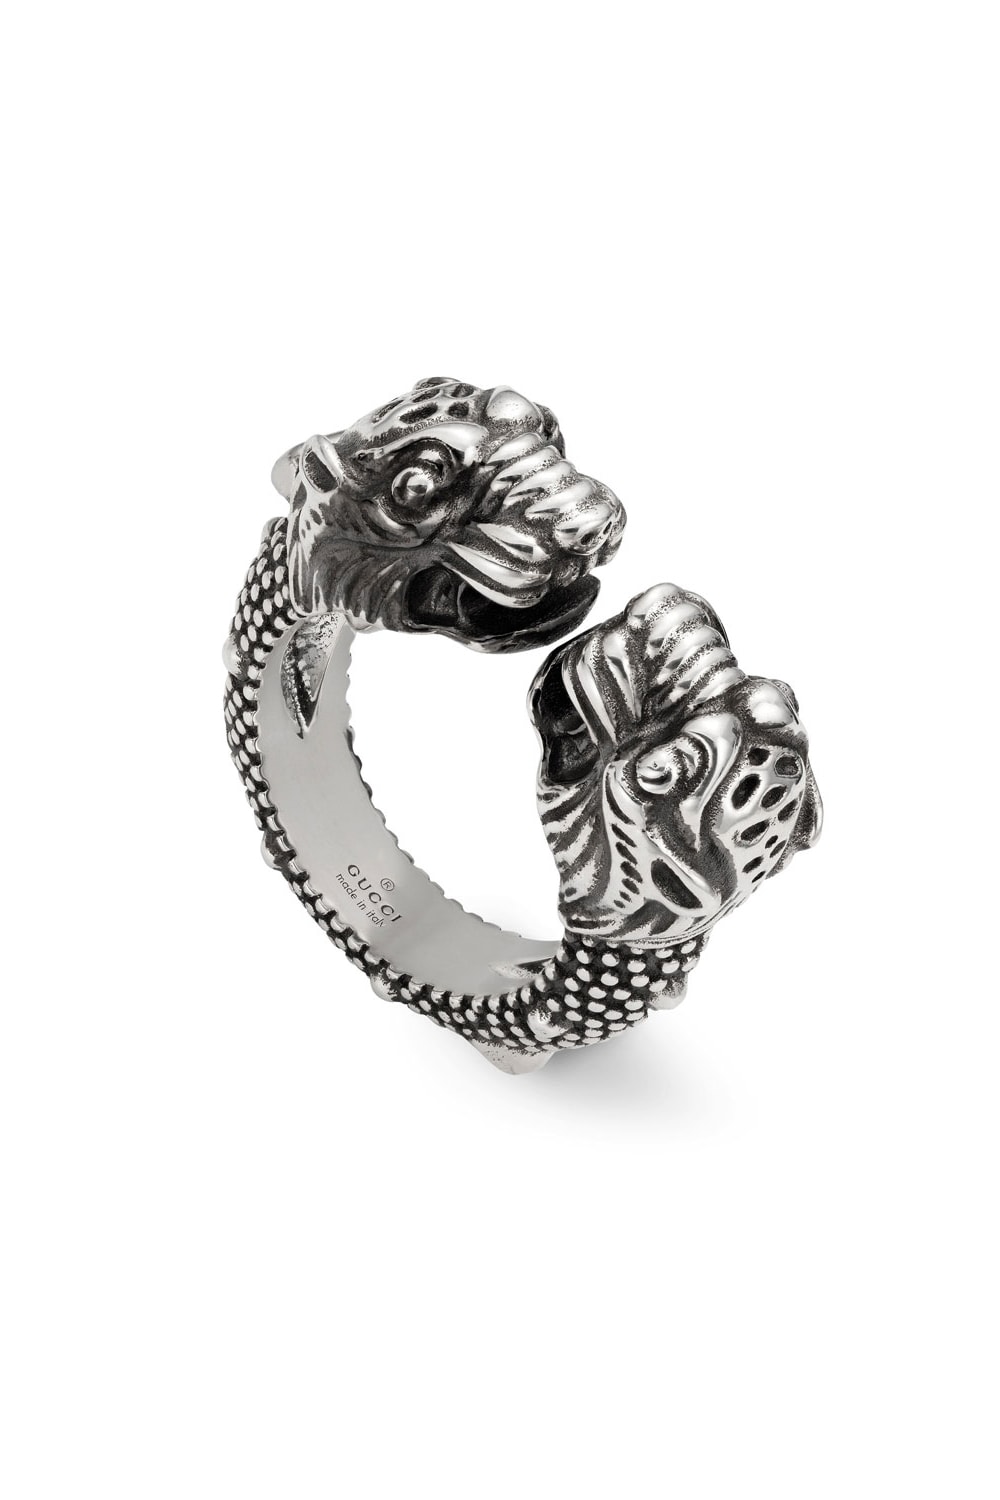 Gucci Siamese Snake Tiger Head Ring accessories jewelry release info alessando michele